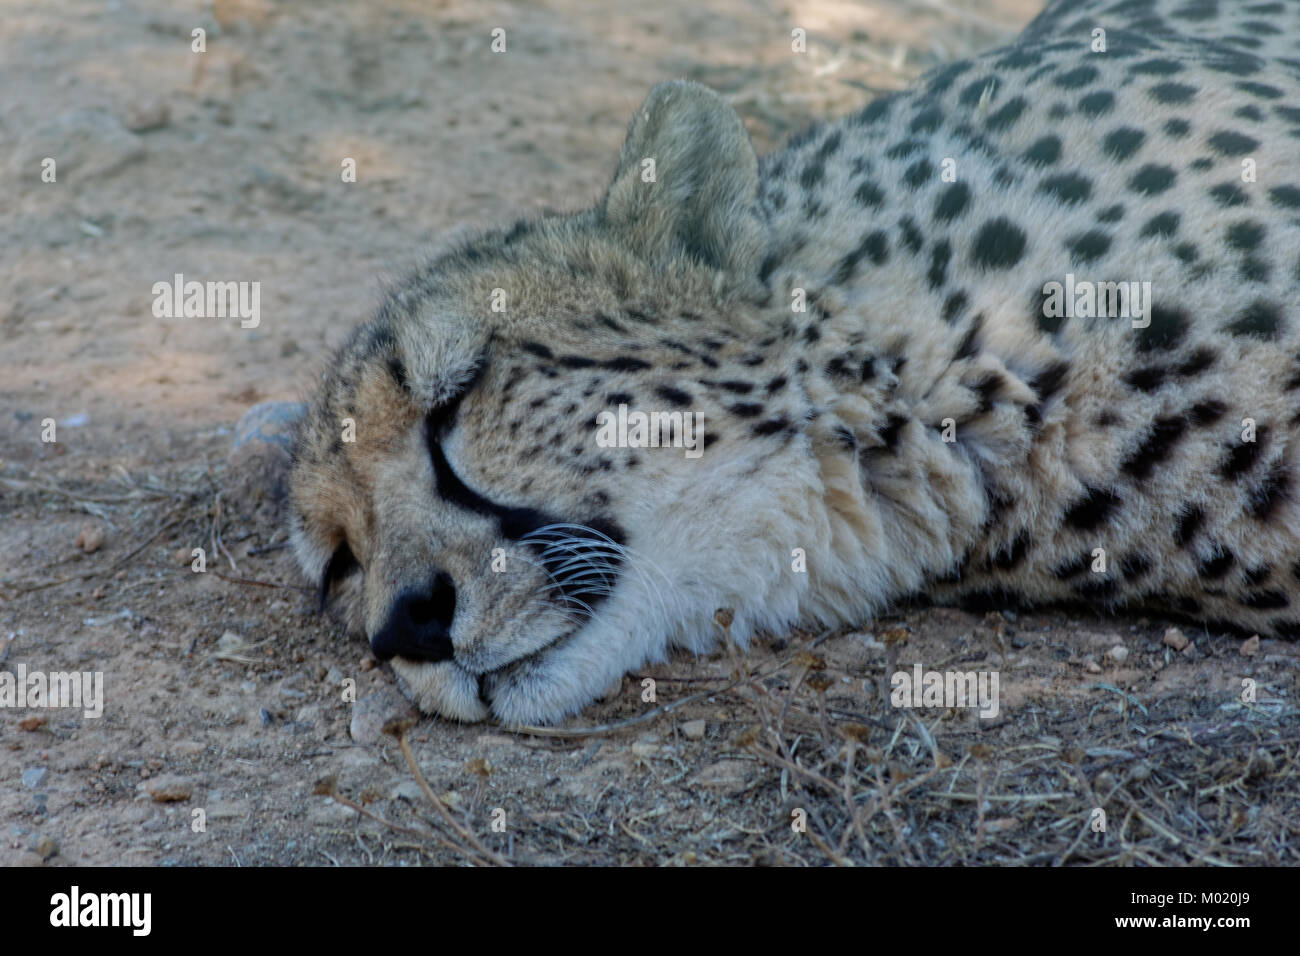 Sleeping cheetah under a shade Stock Photo